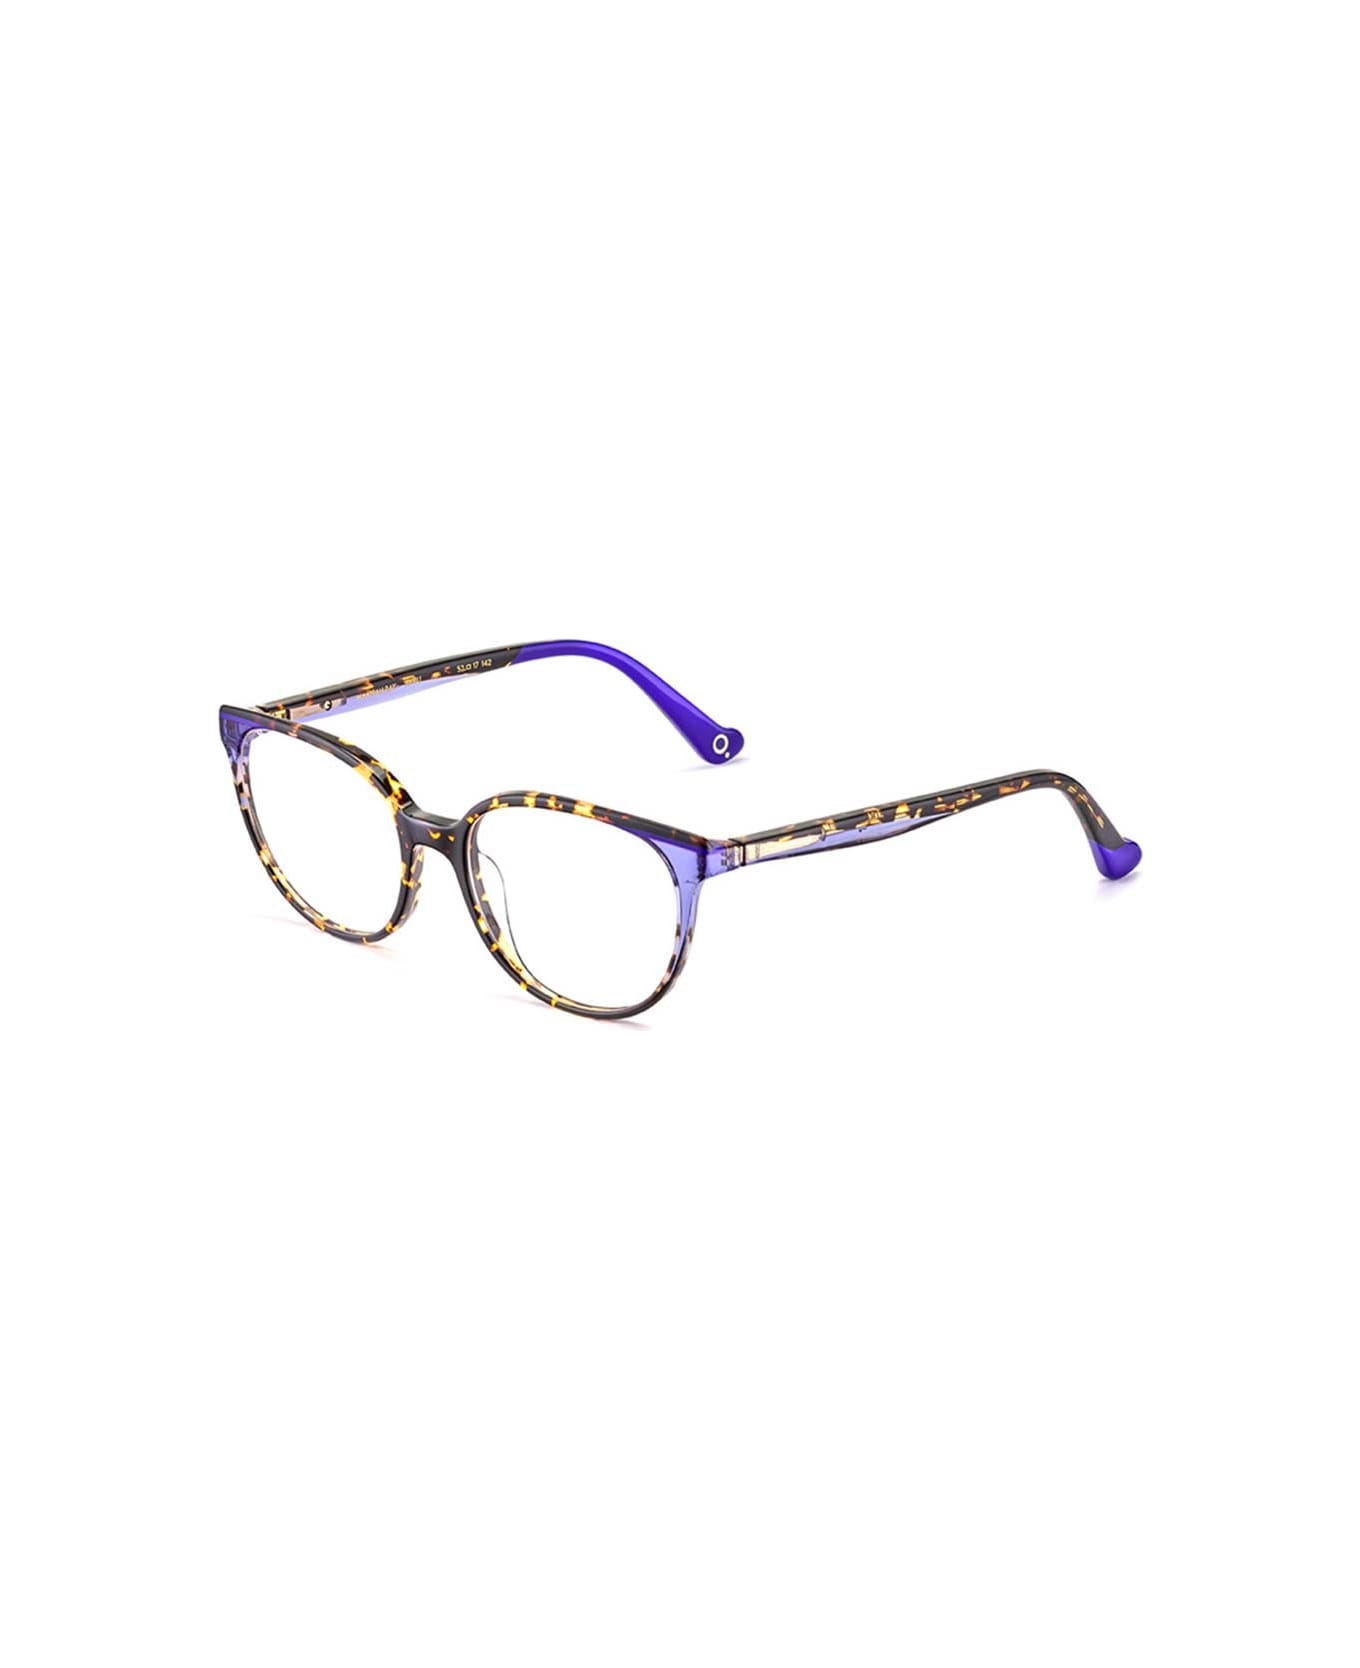 Etnia Barcelona Glasses - Multicolor アイウェア